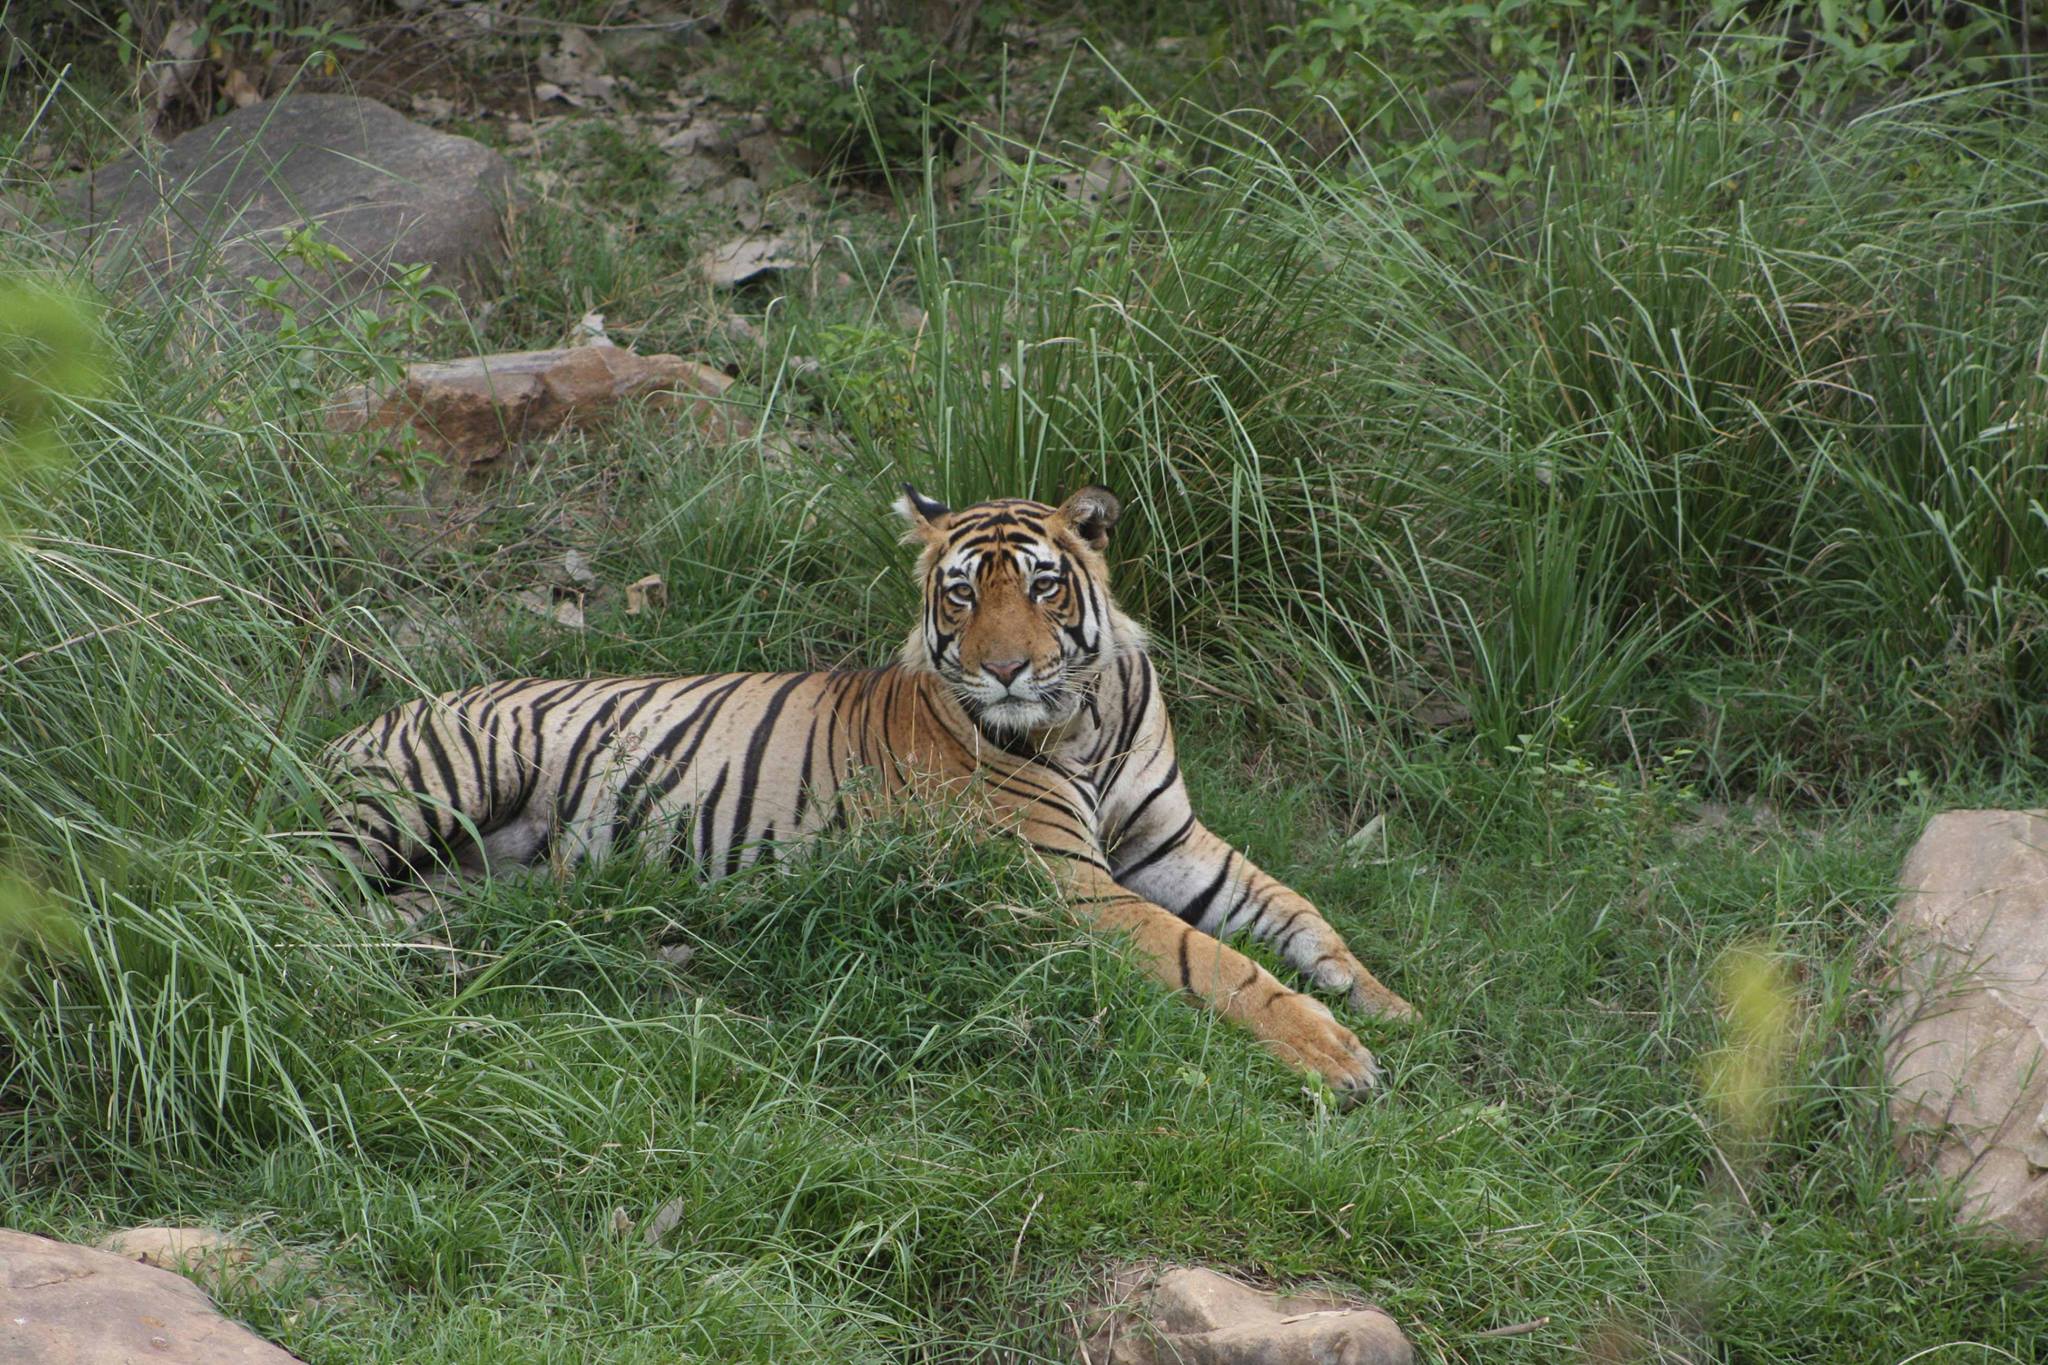 Indian Tiger.jpg